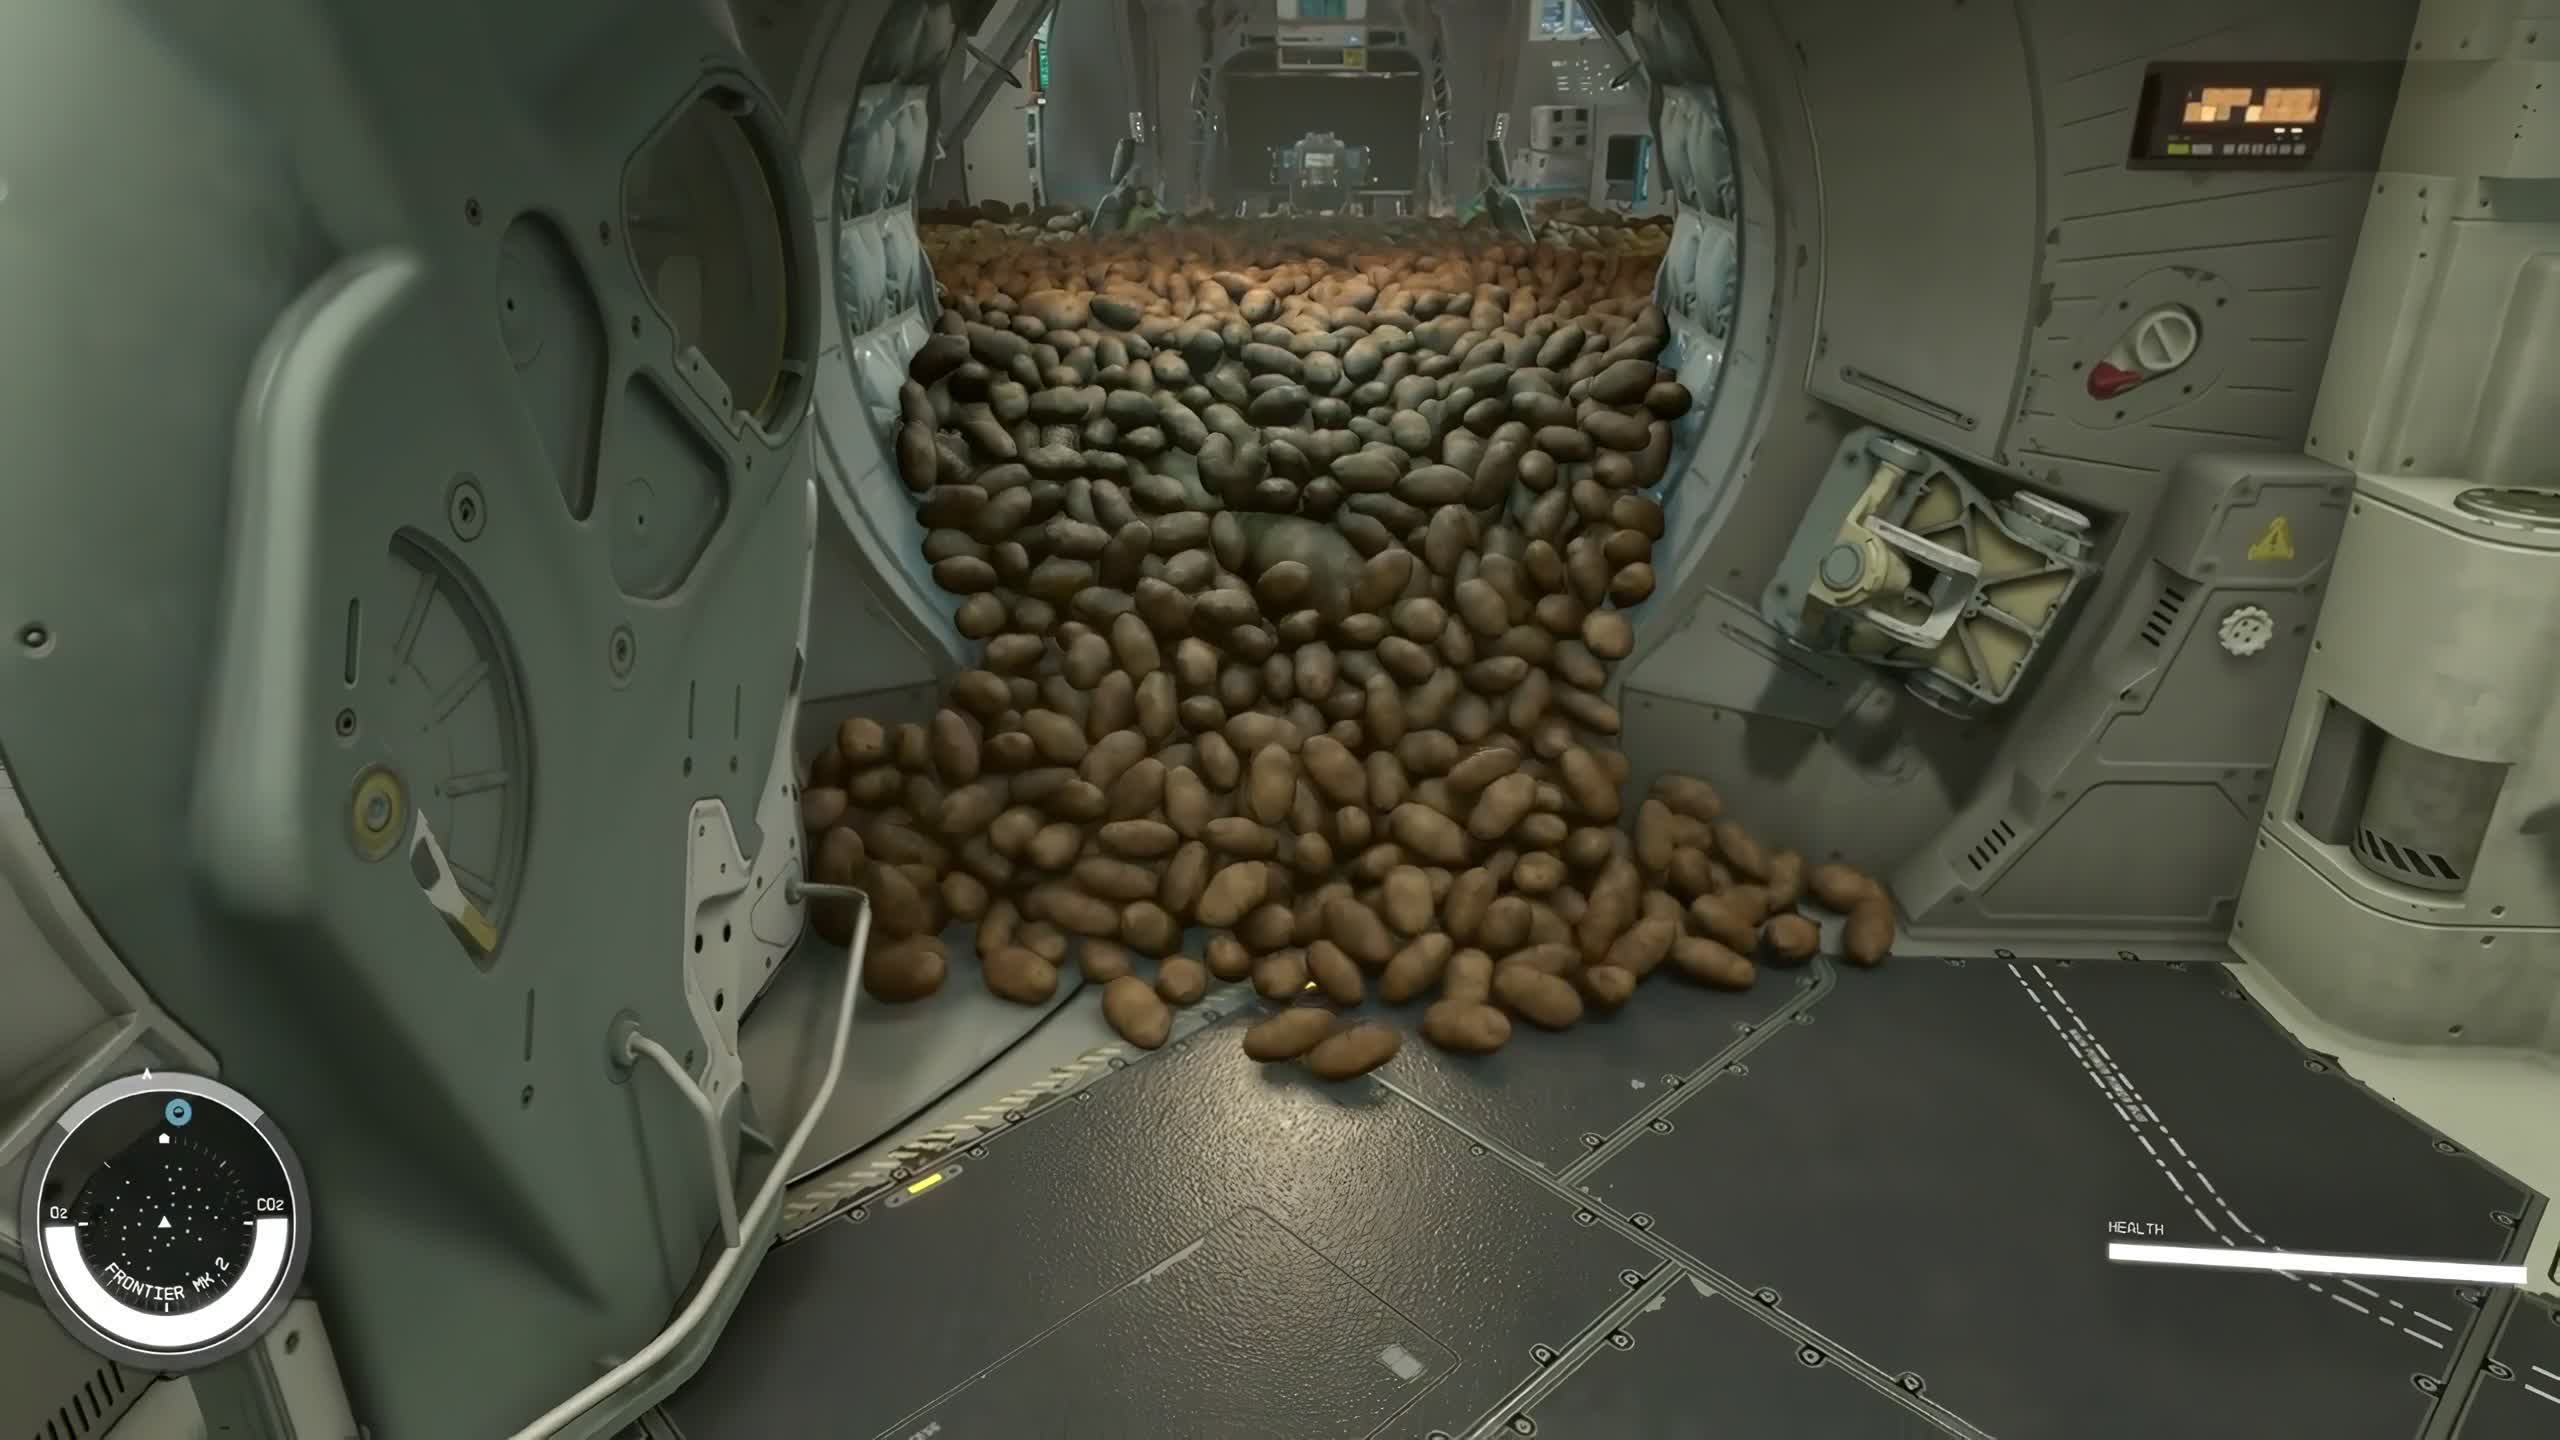 See Starfield's physics engine handle 20,000 potatoes stuffed into one room